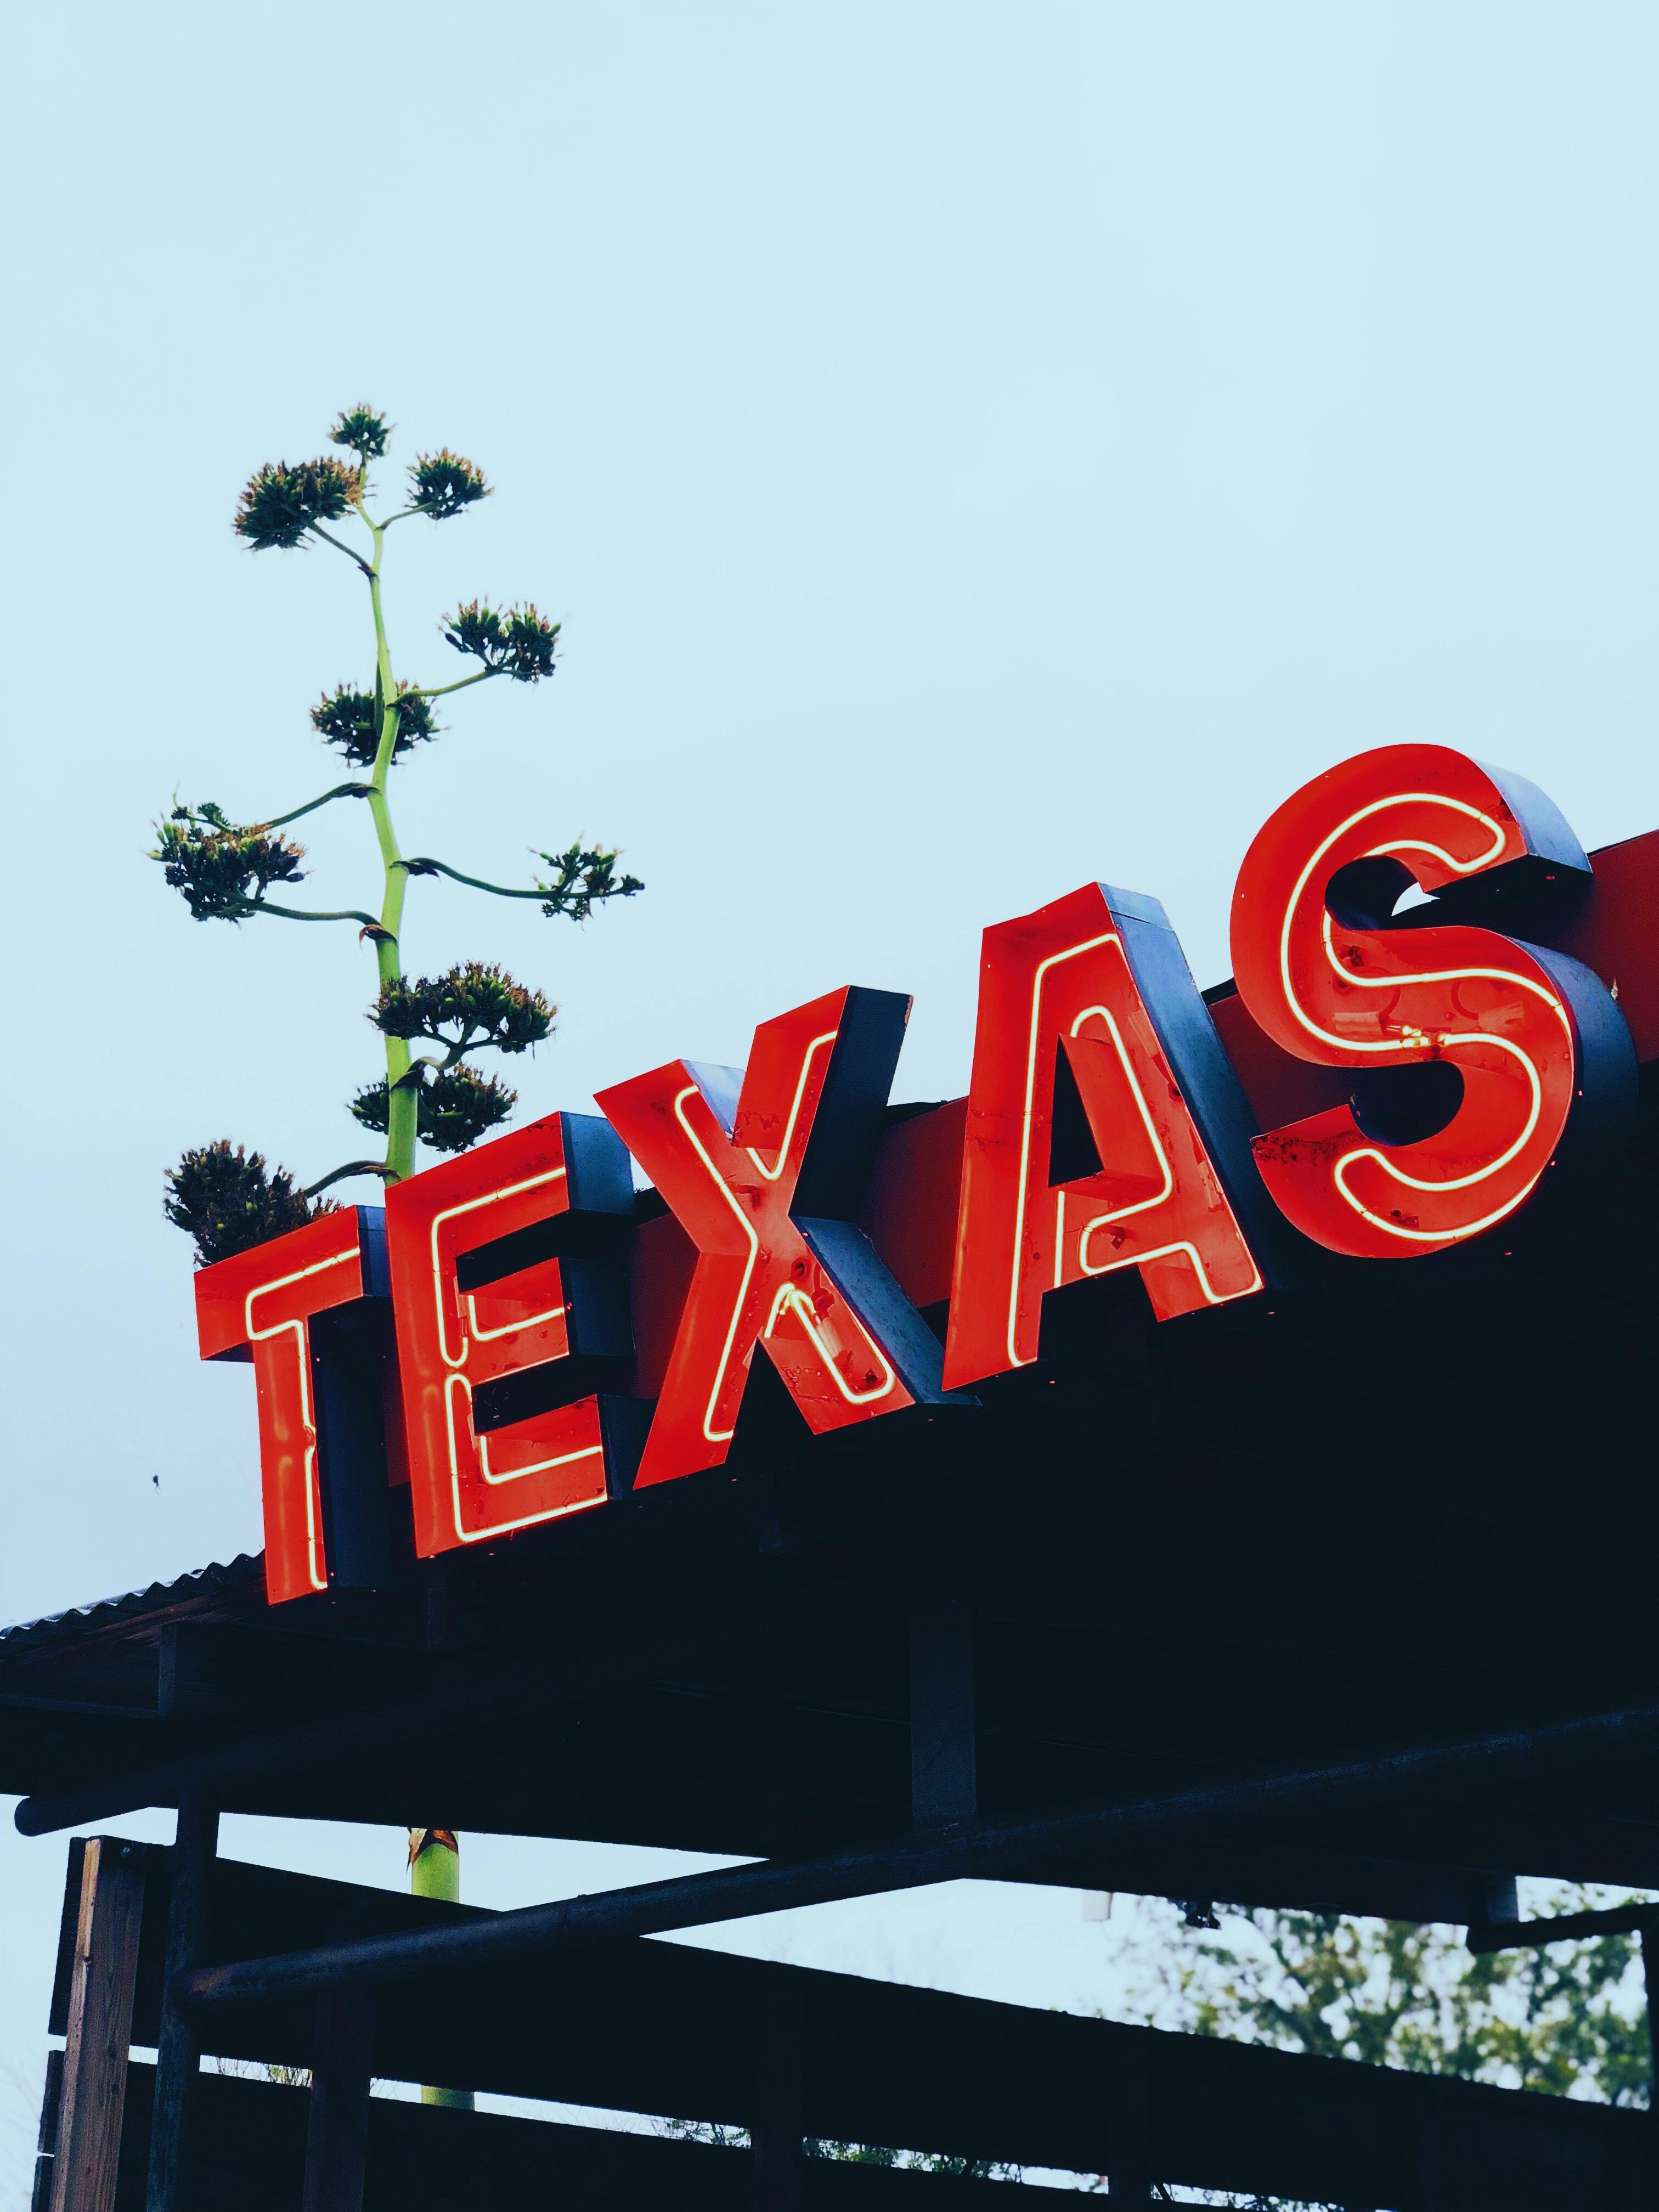 Texas sign background image